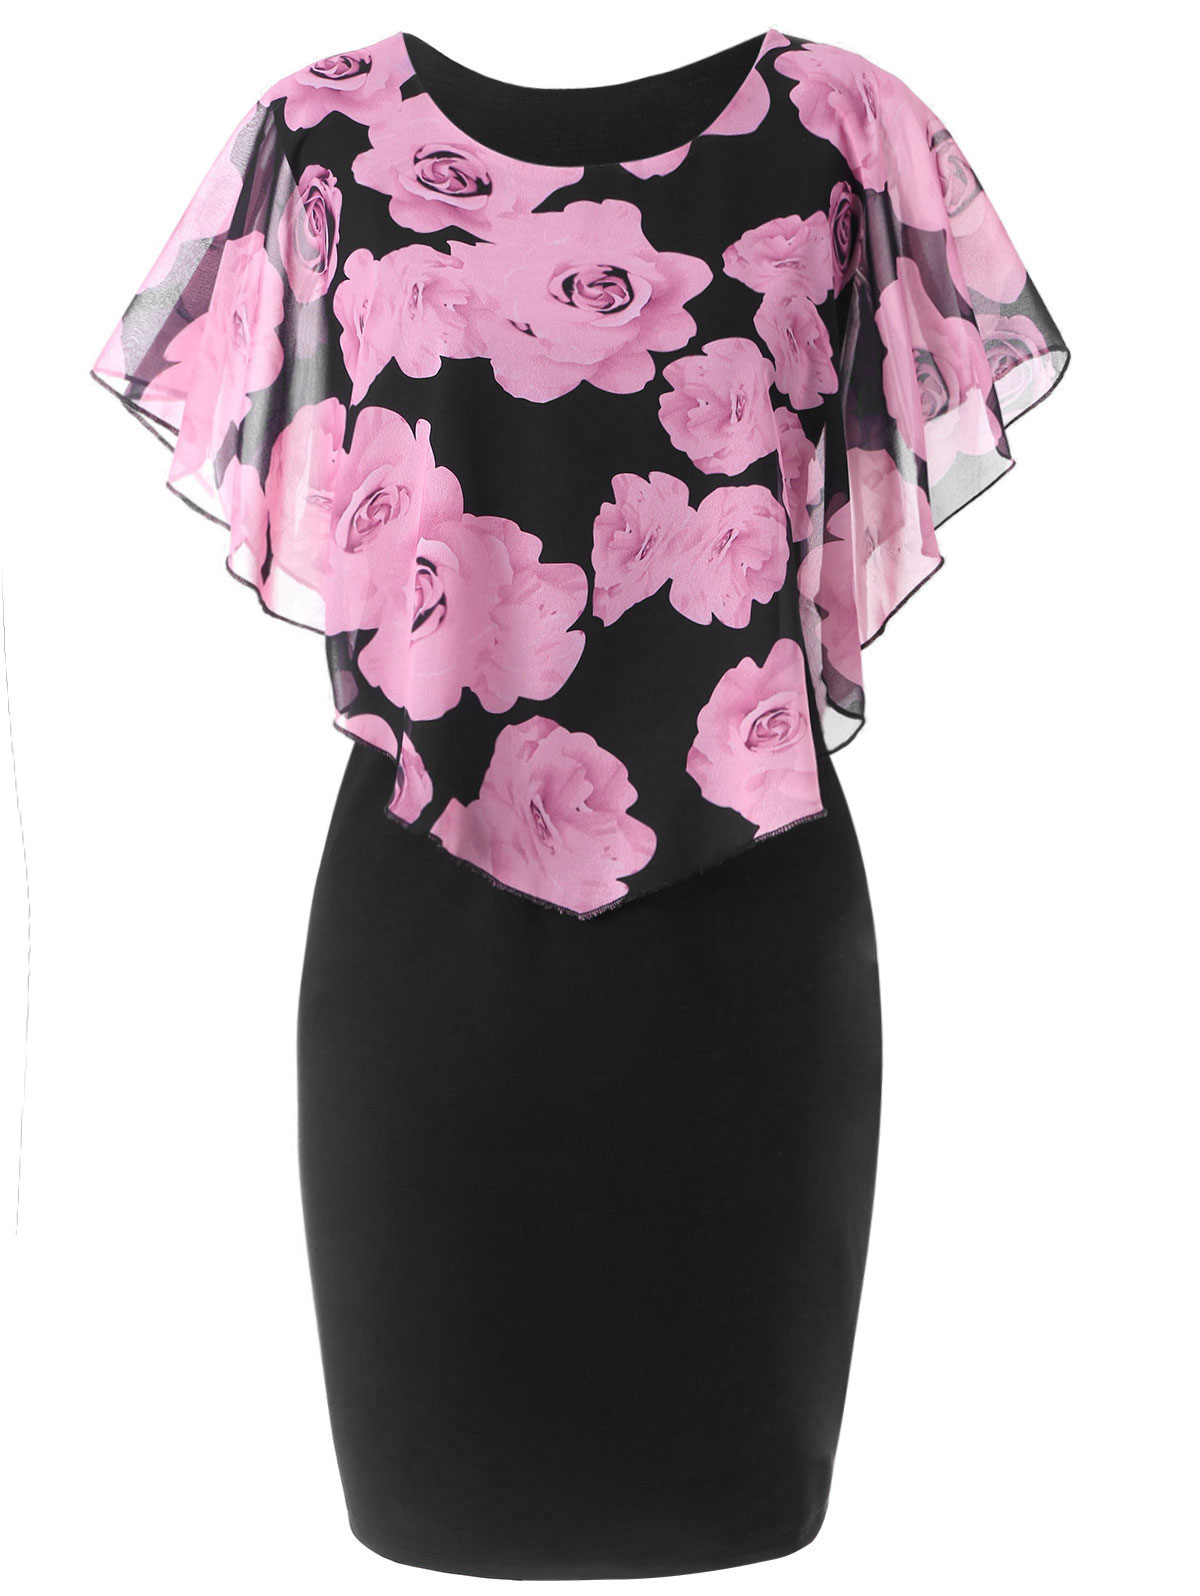 Women Bodycon Pencil Dress Summer Plus Size Cloak Sleeve Rose Printed Mini Club Party Dress pink